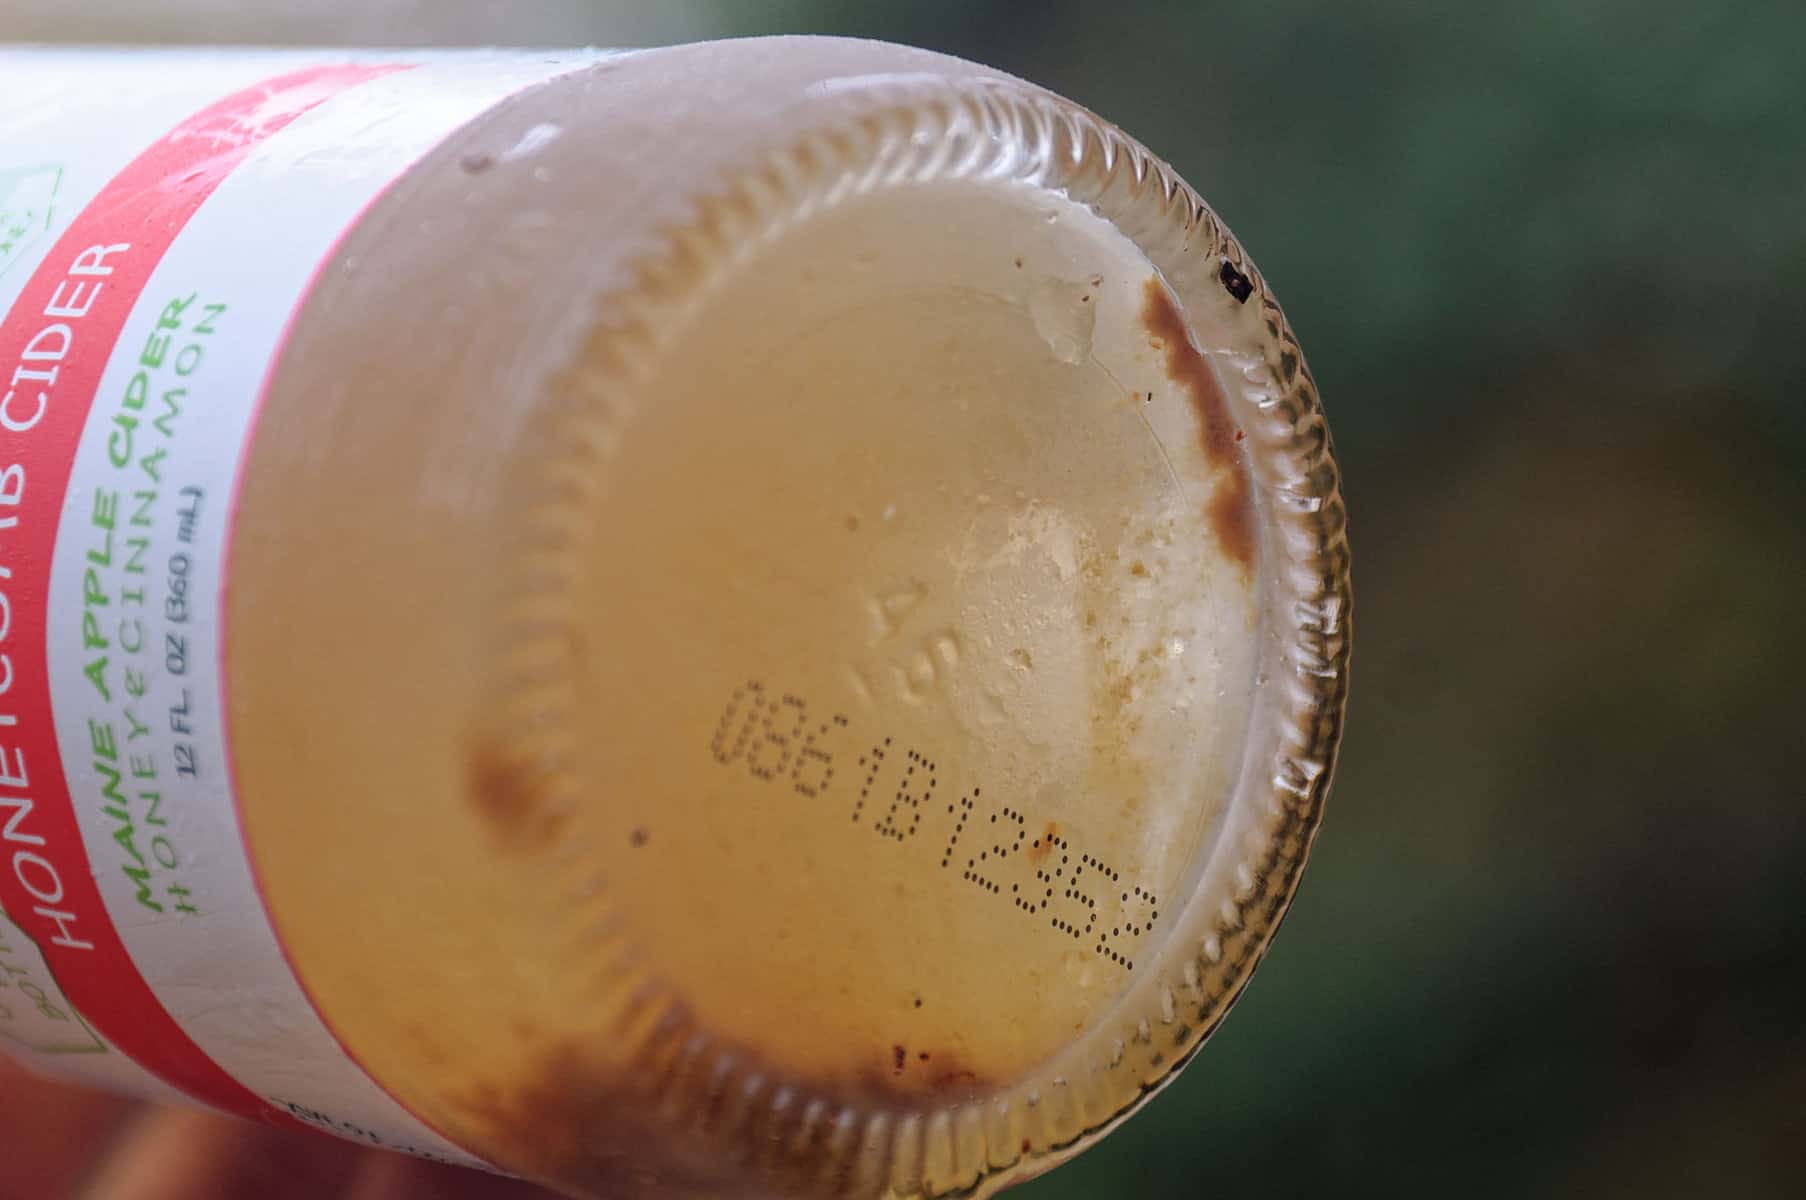 sediment in honey soda bottle